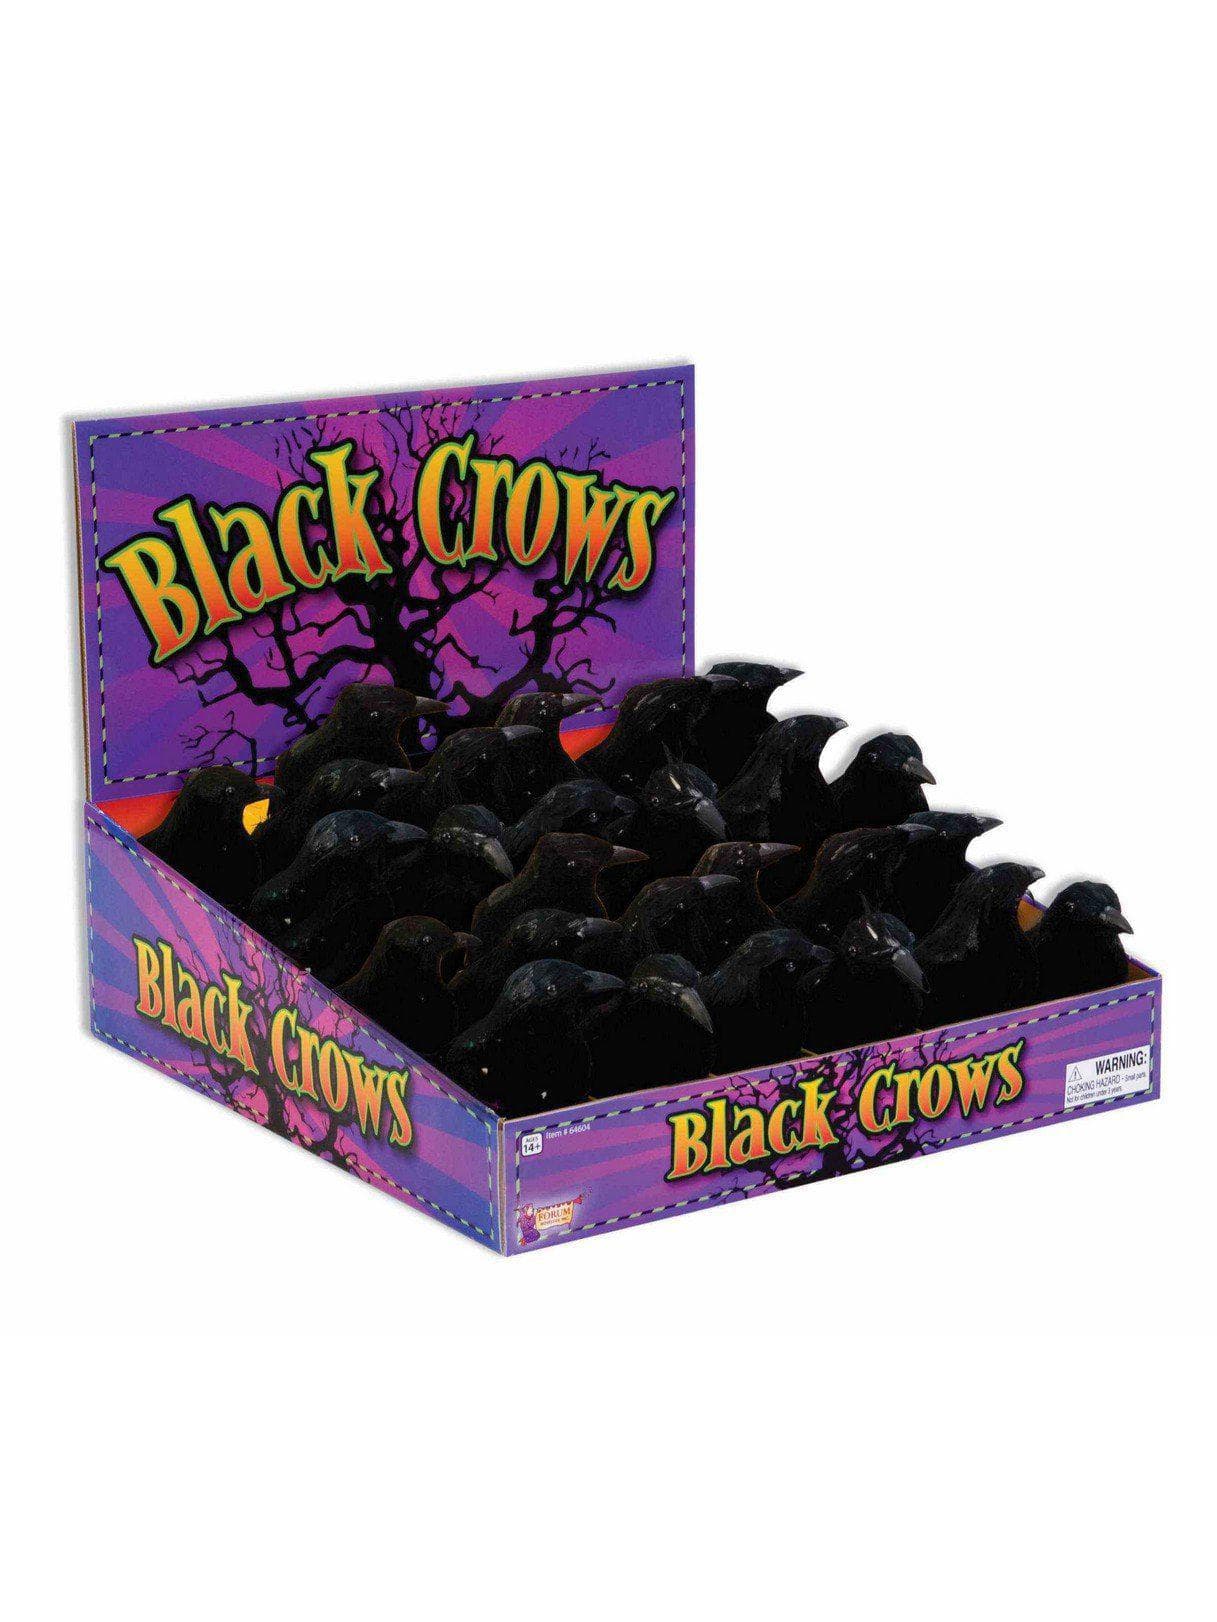 5-inch Black Crow Decoration - costumes.com